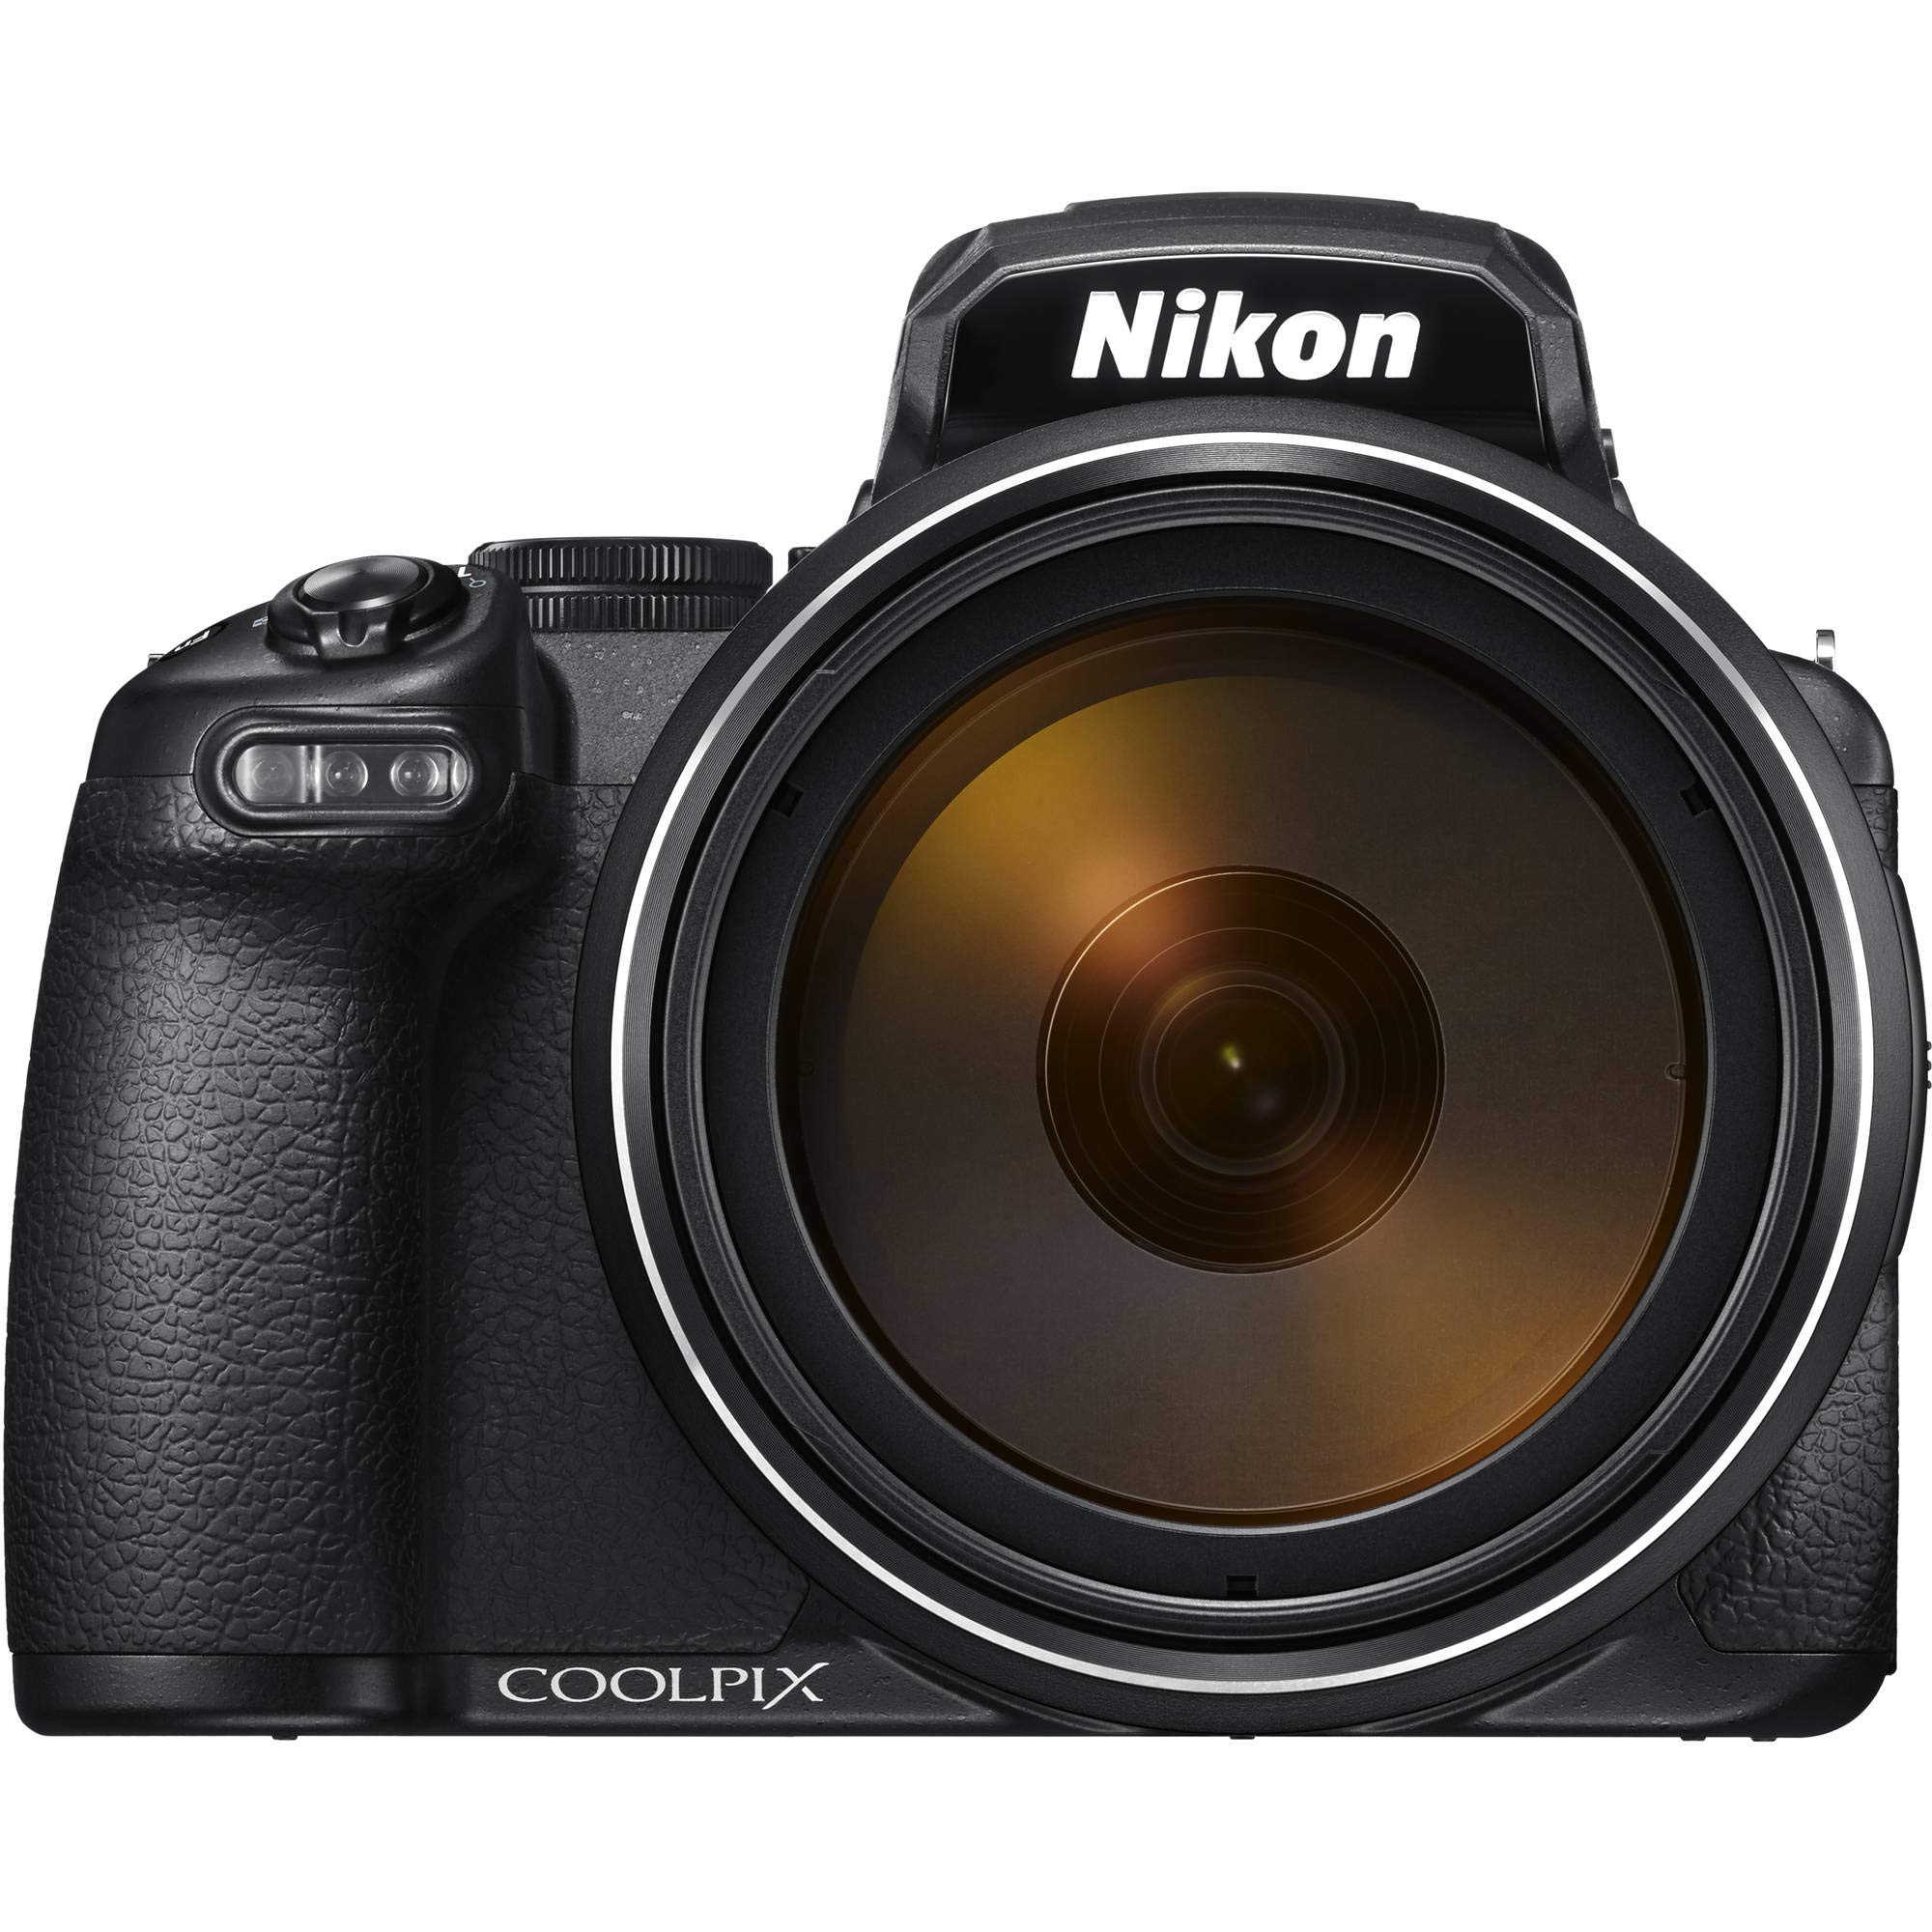 Nikon COOLPIX P1000 Digital Camera + 128GB Sandisk Extreme Memory Card Travel Bundle International Model